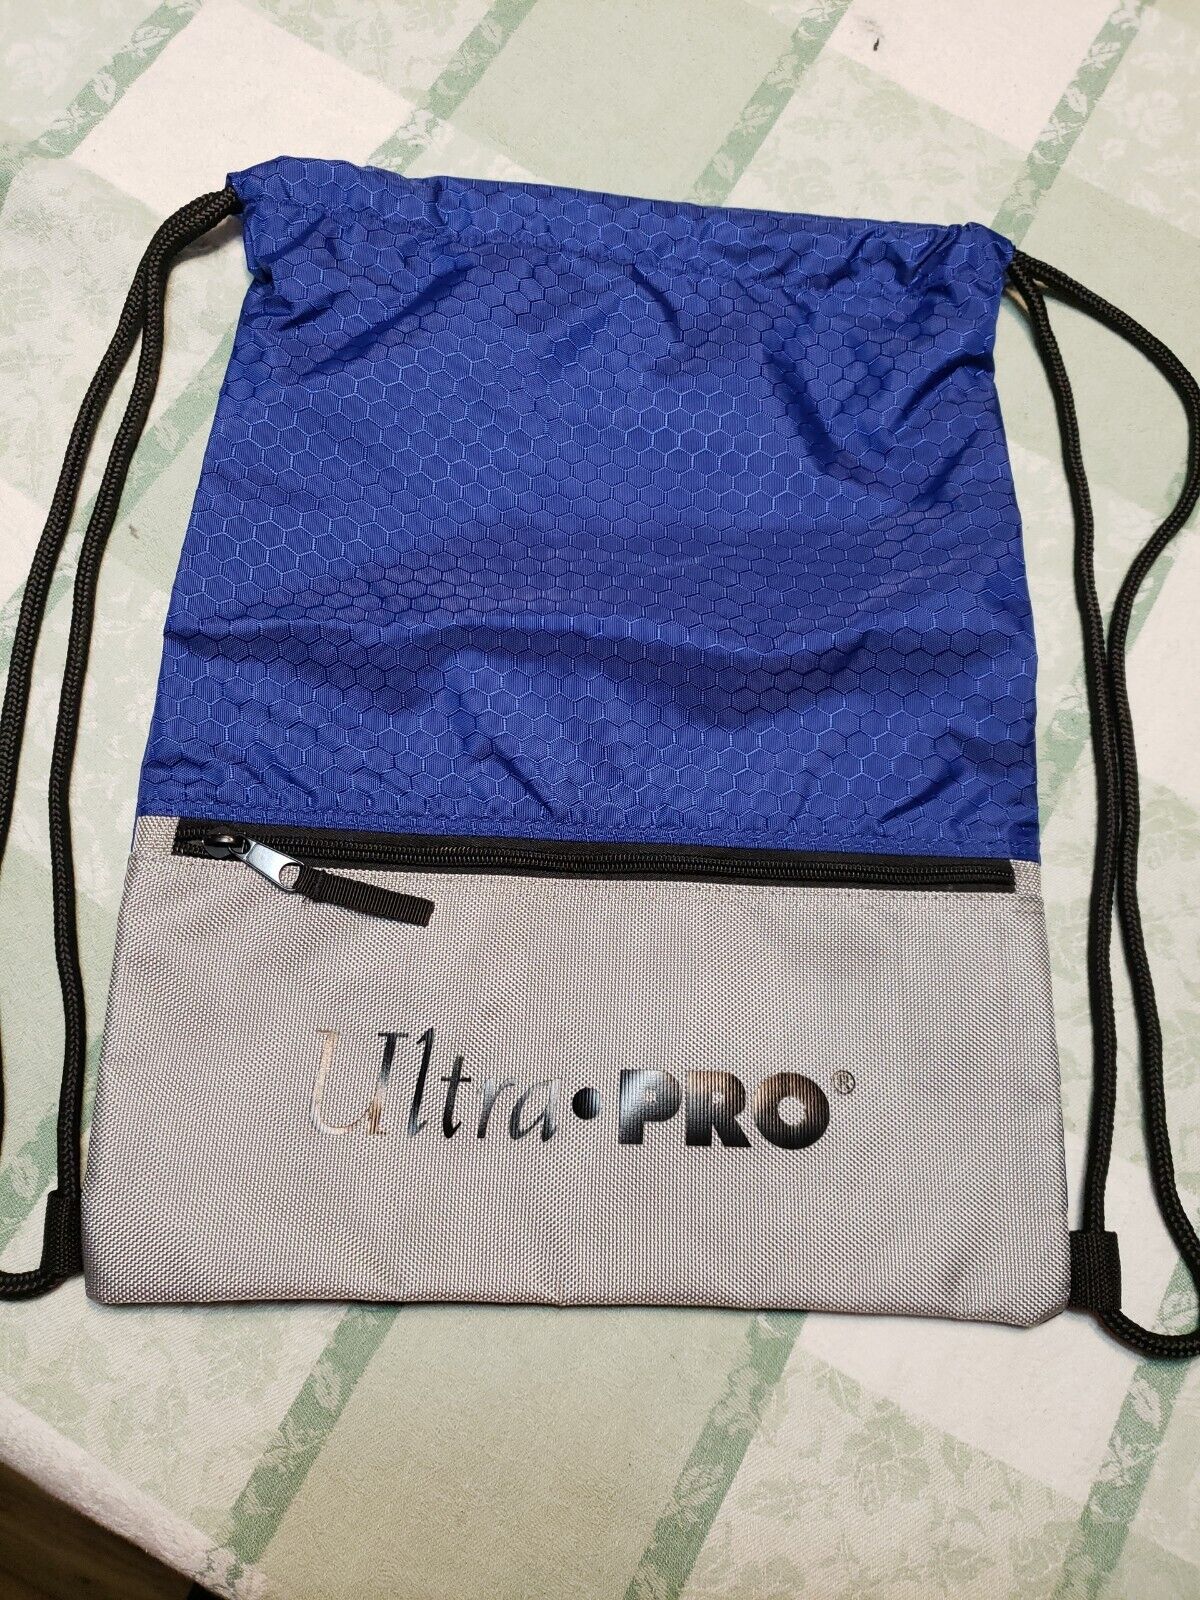 Ultra Pro Blue/grey Drawstring Bag